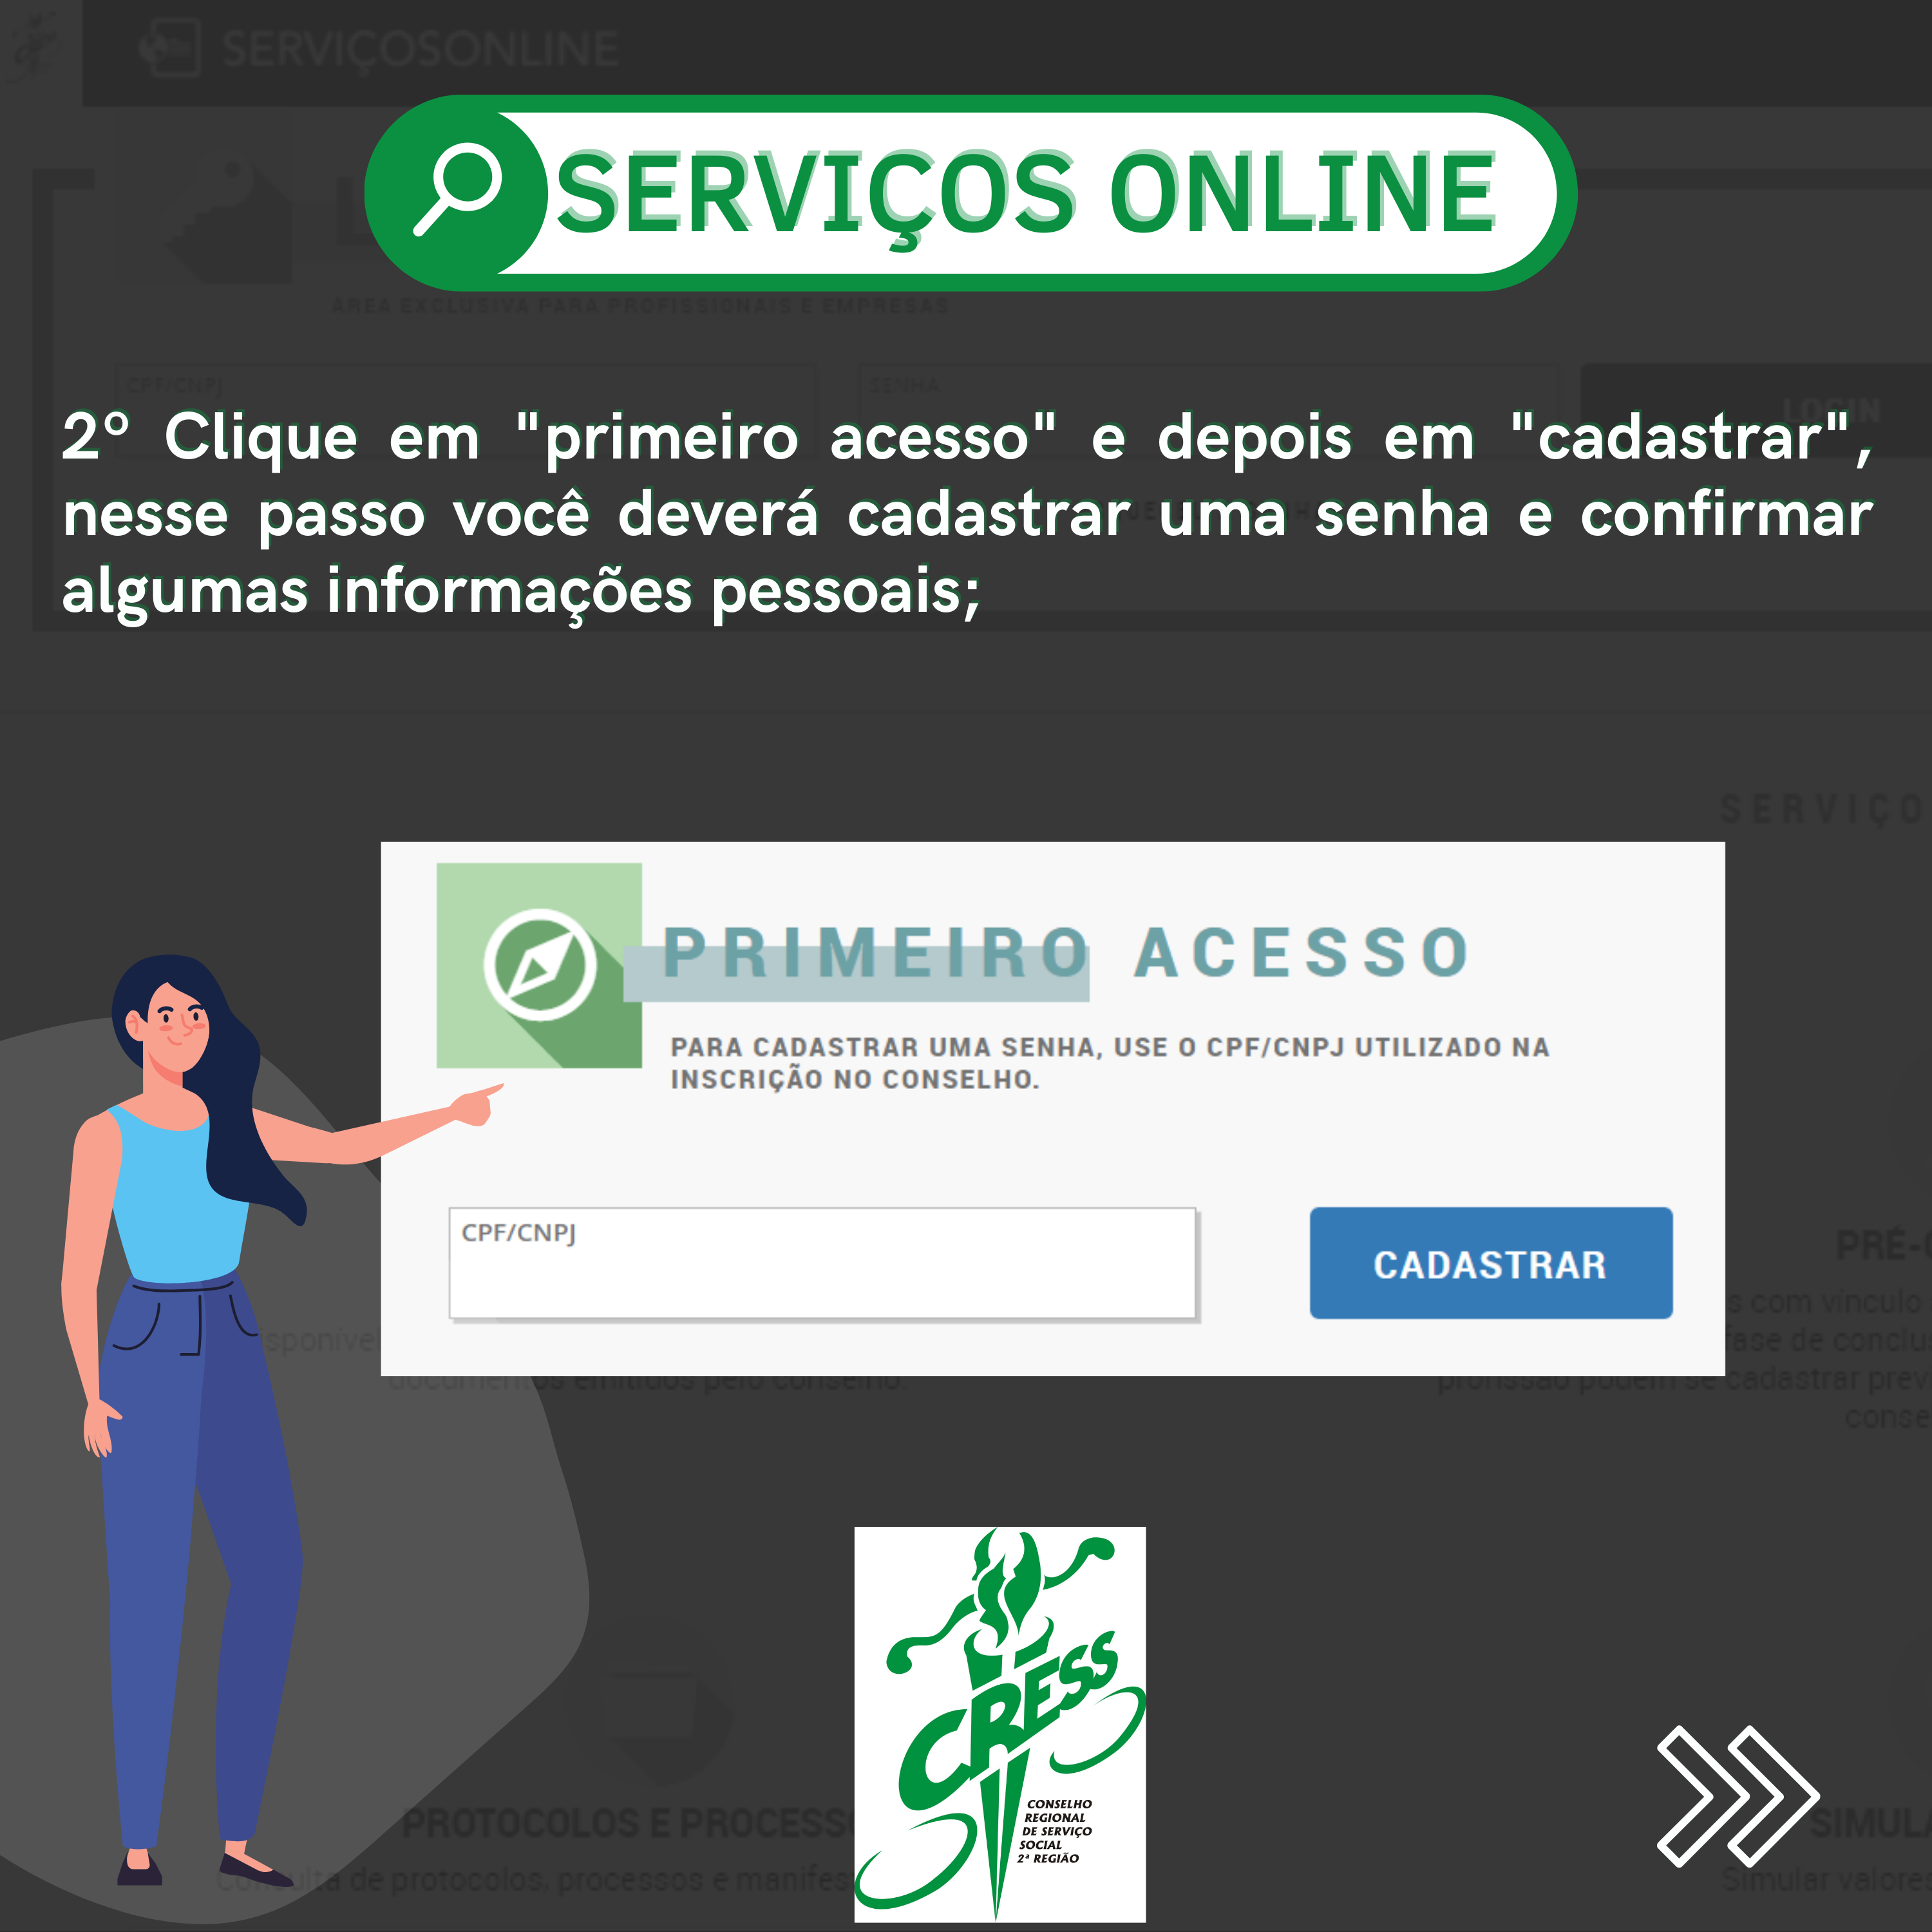 Serviços online (2)